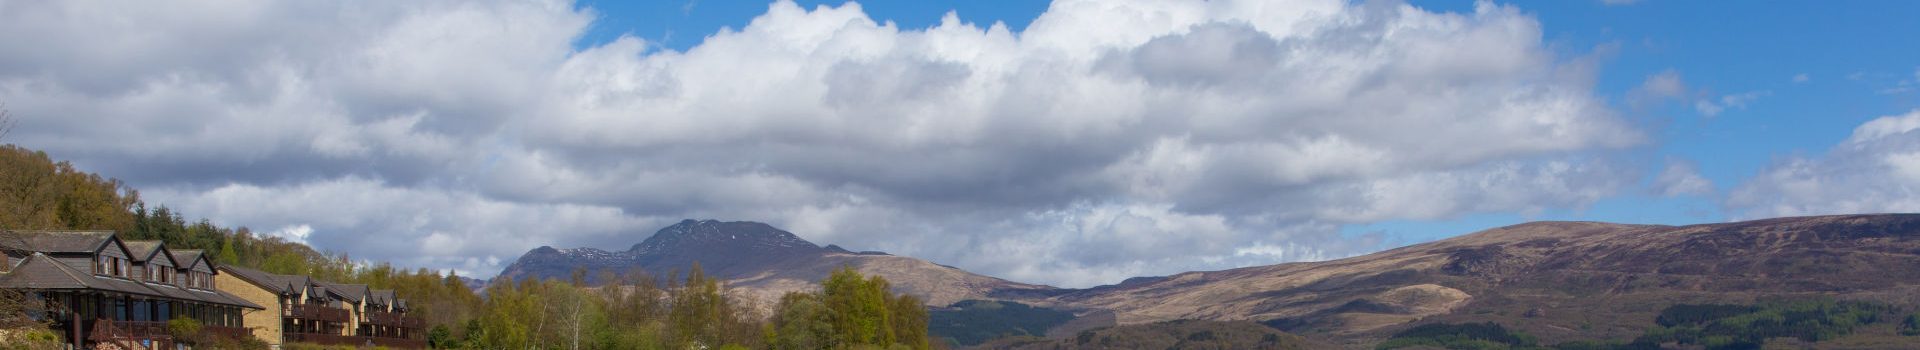 Clouds over Loch Lomond in Scotland